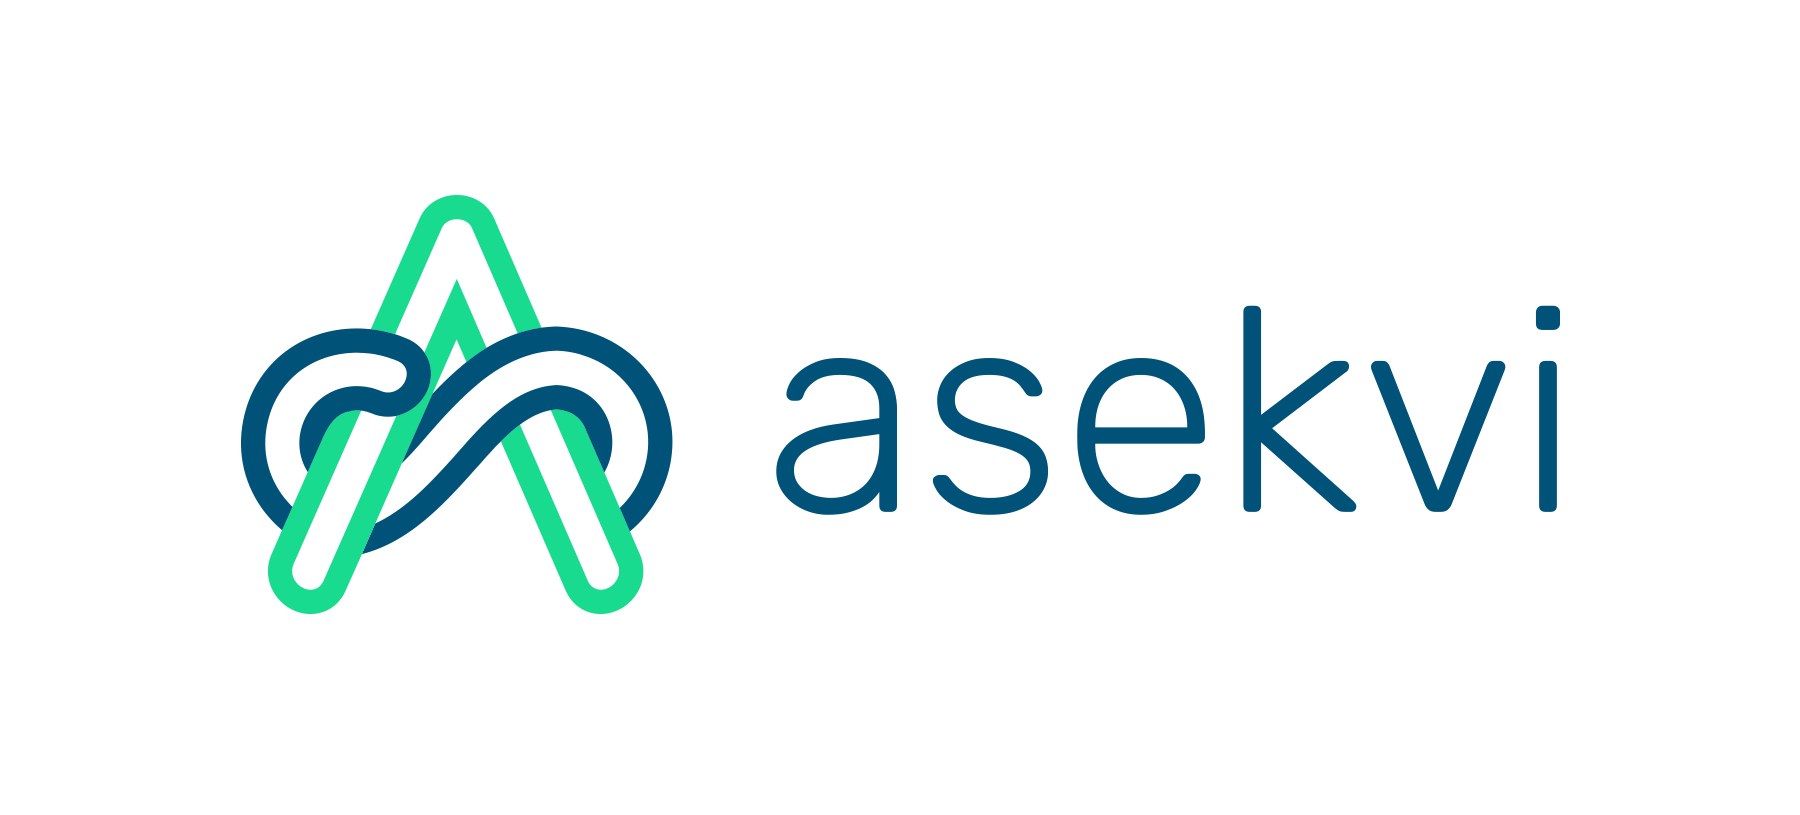 asekvi logo design